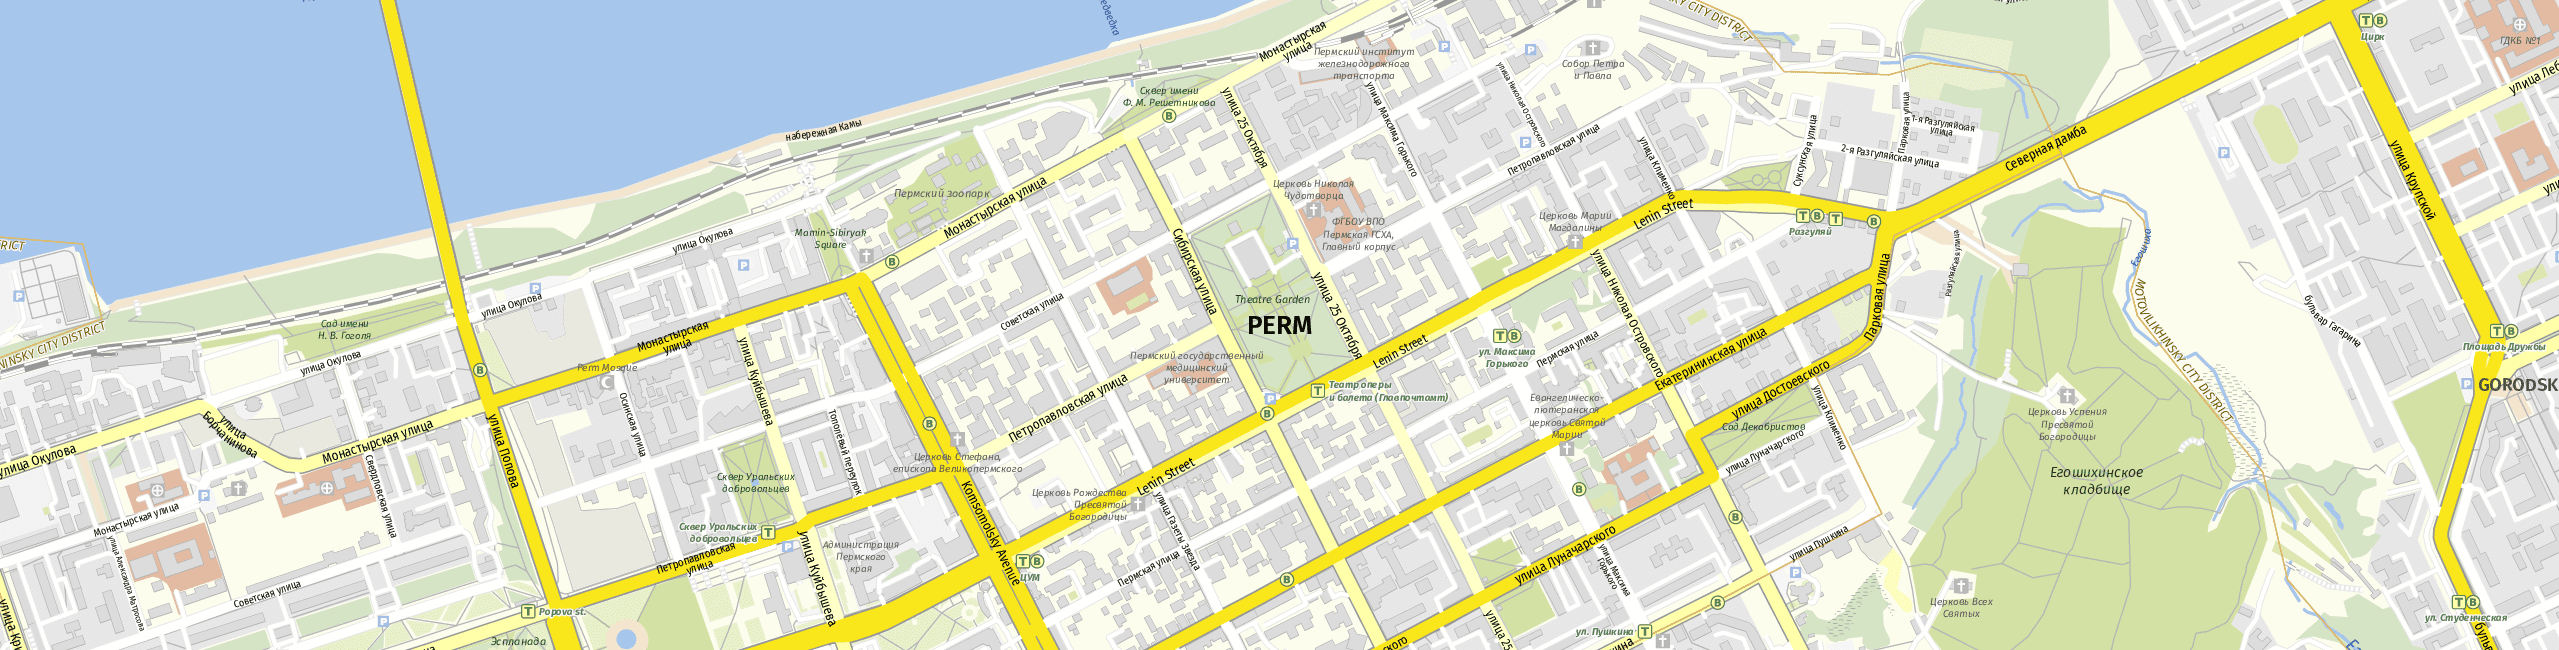 Stadtplan Perm zum Downloaden.